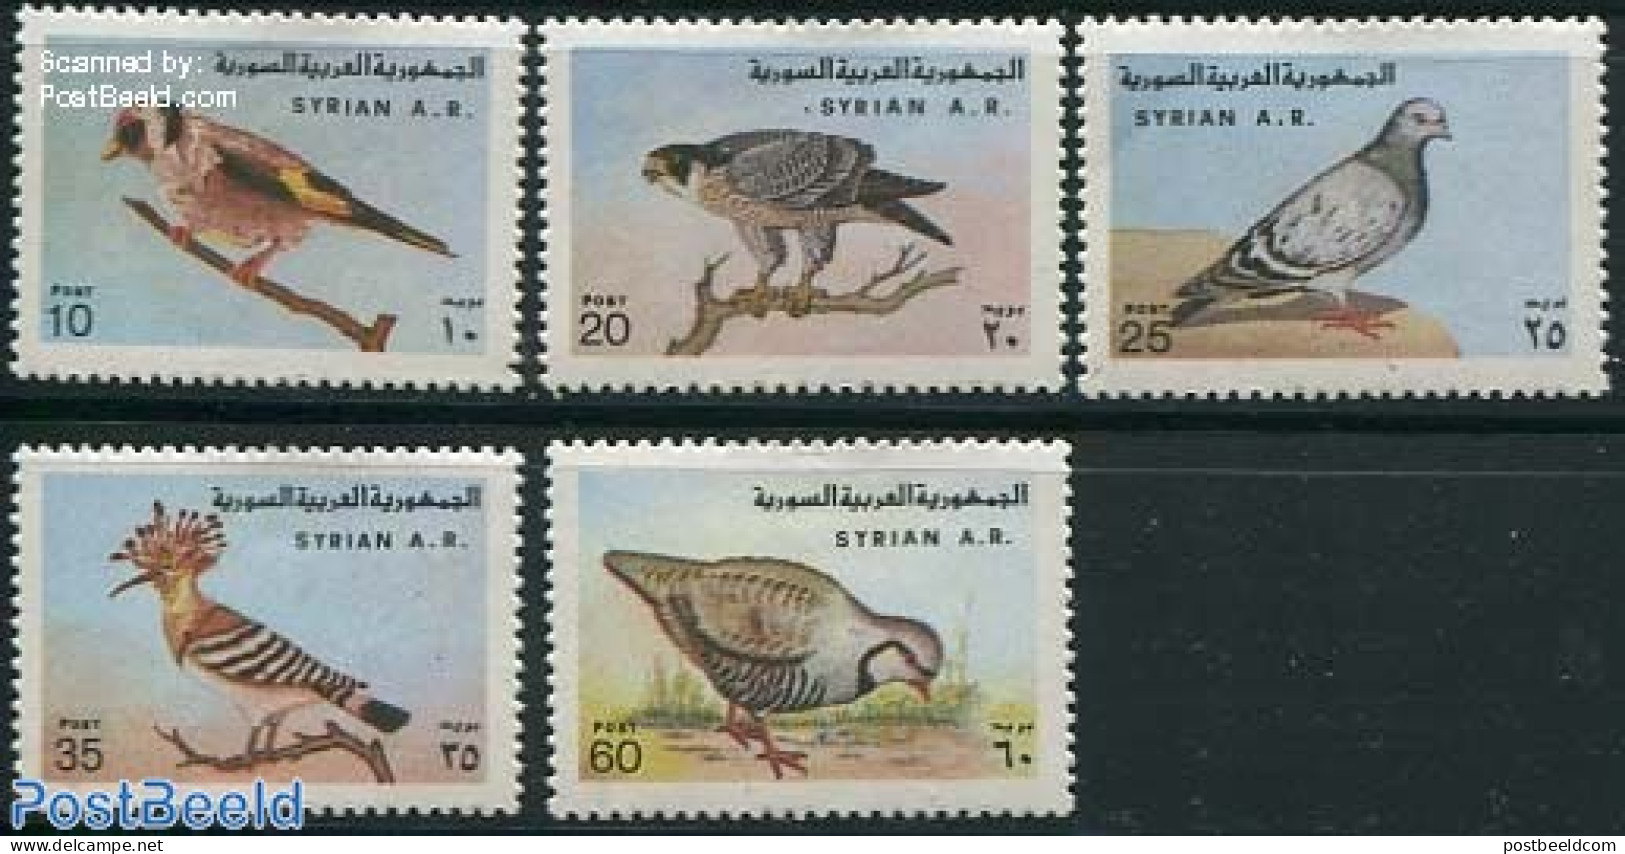 Syria 1978 Birds 5v, Mint NH, Nature - Birds - Pigeons - Siria